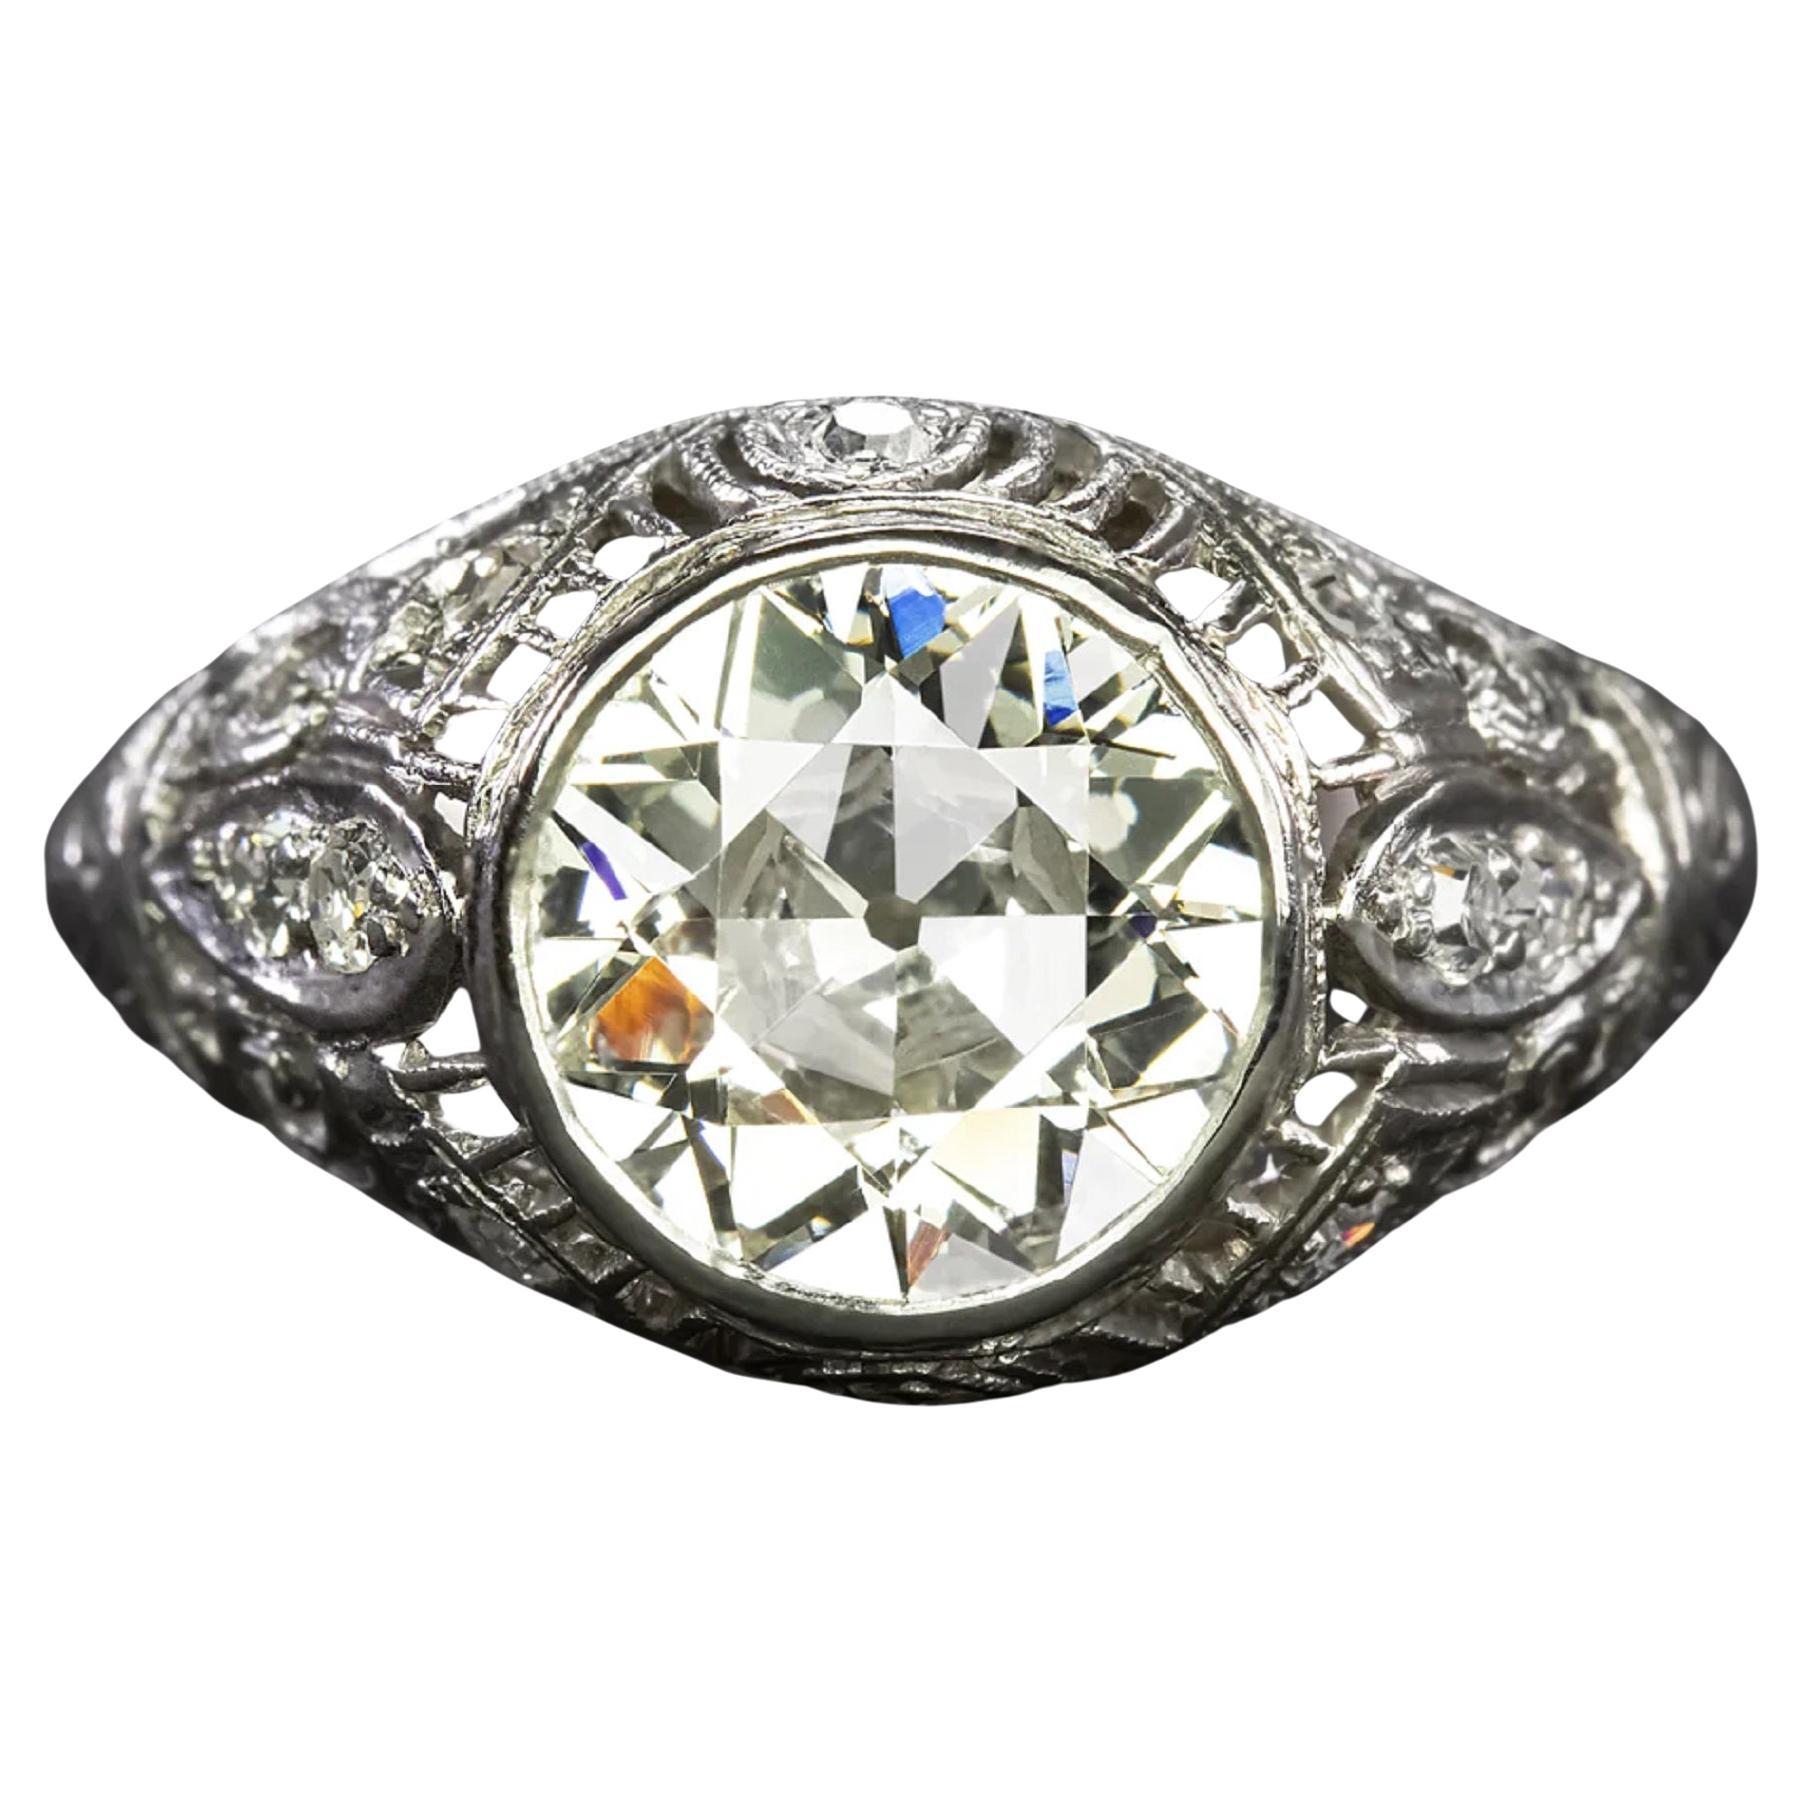 Authentic Vintage 2.27 Carat Old European Cut Diamond Ring